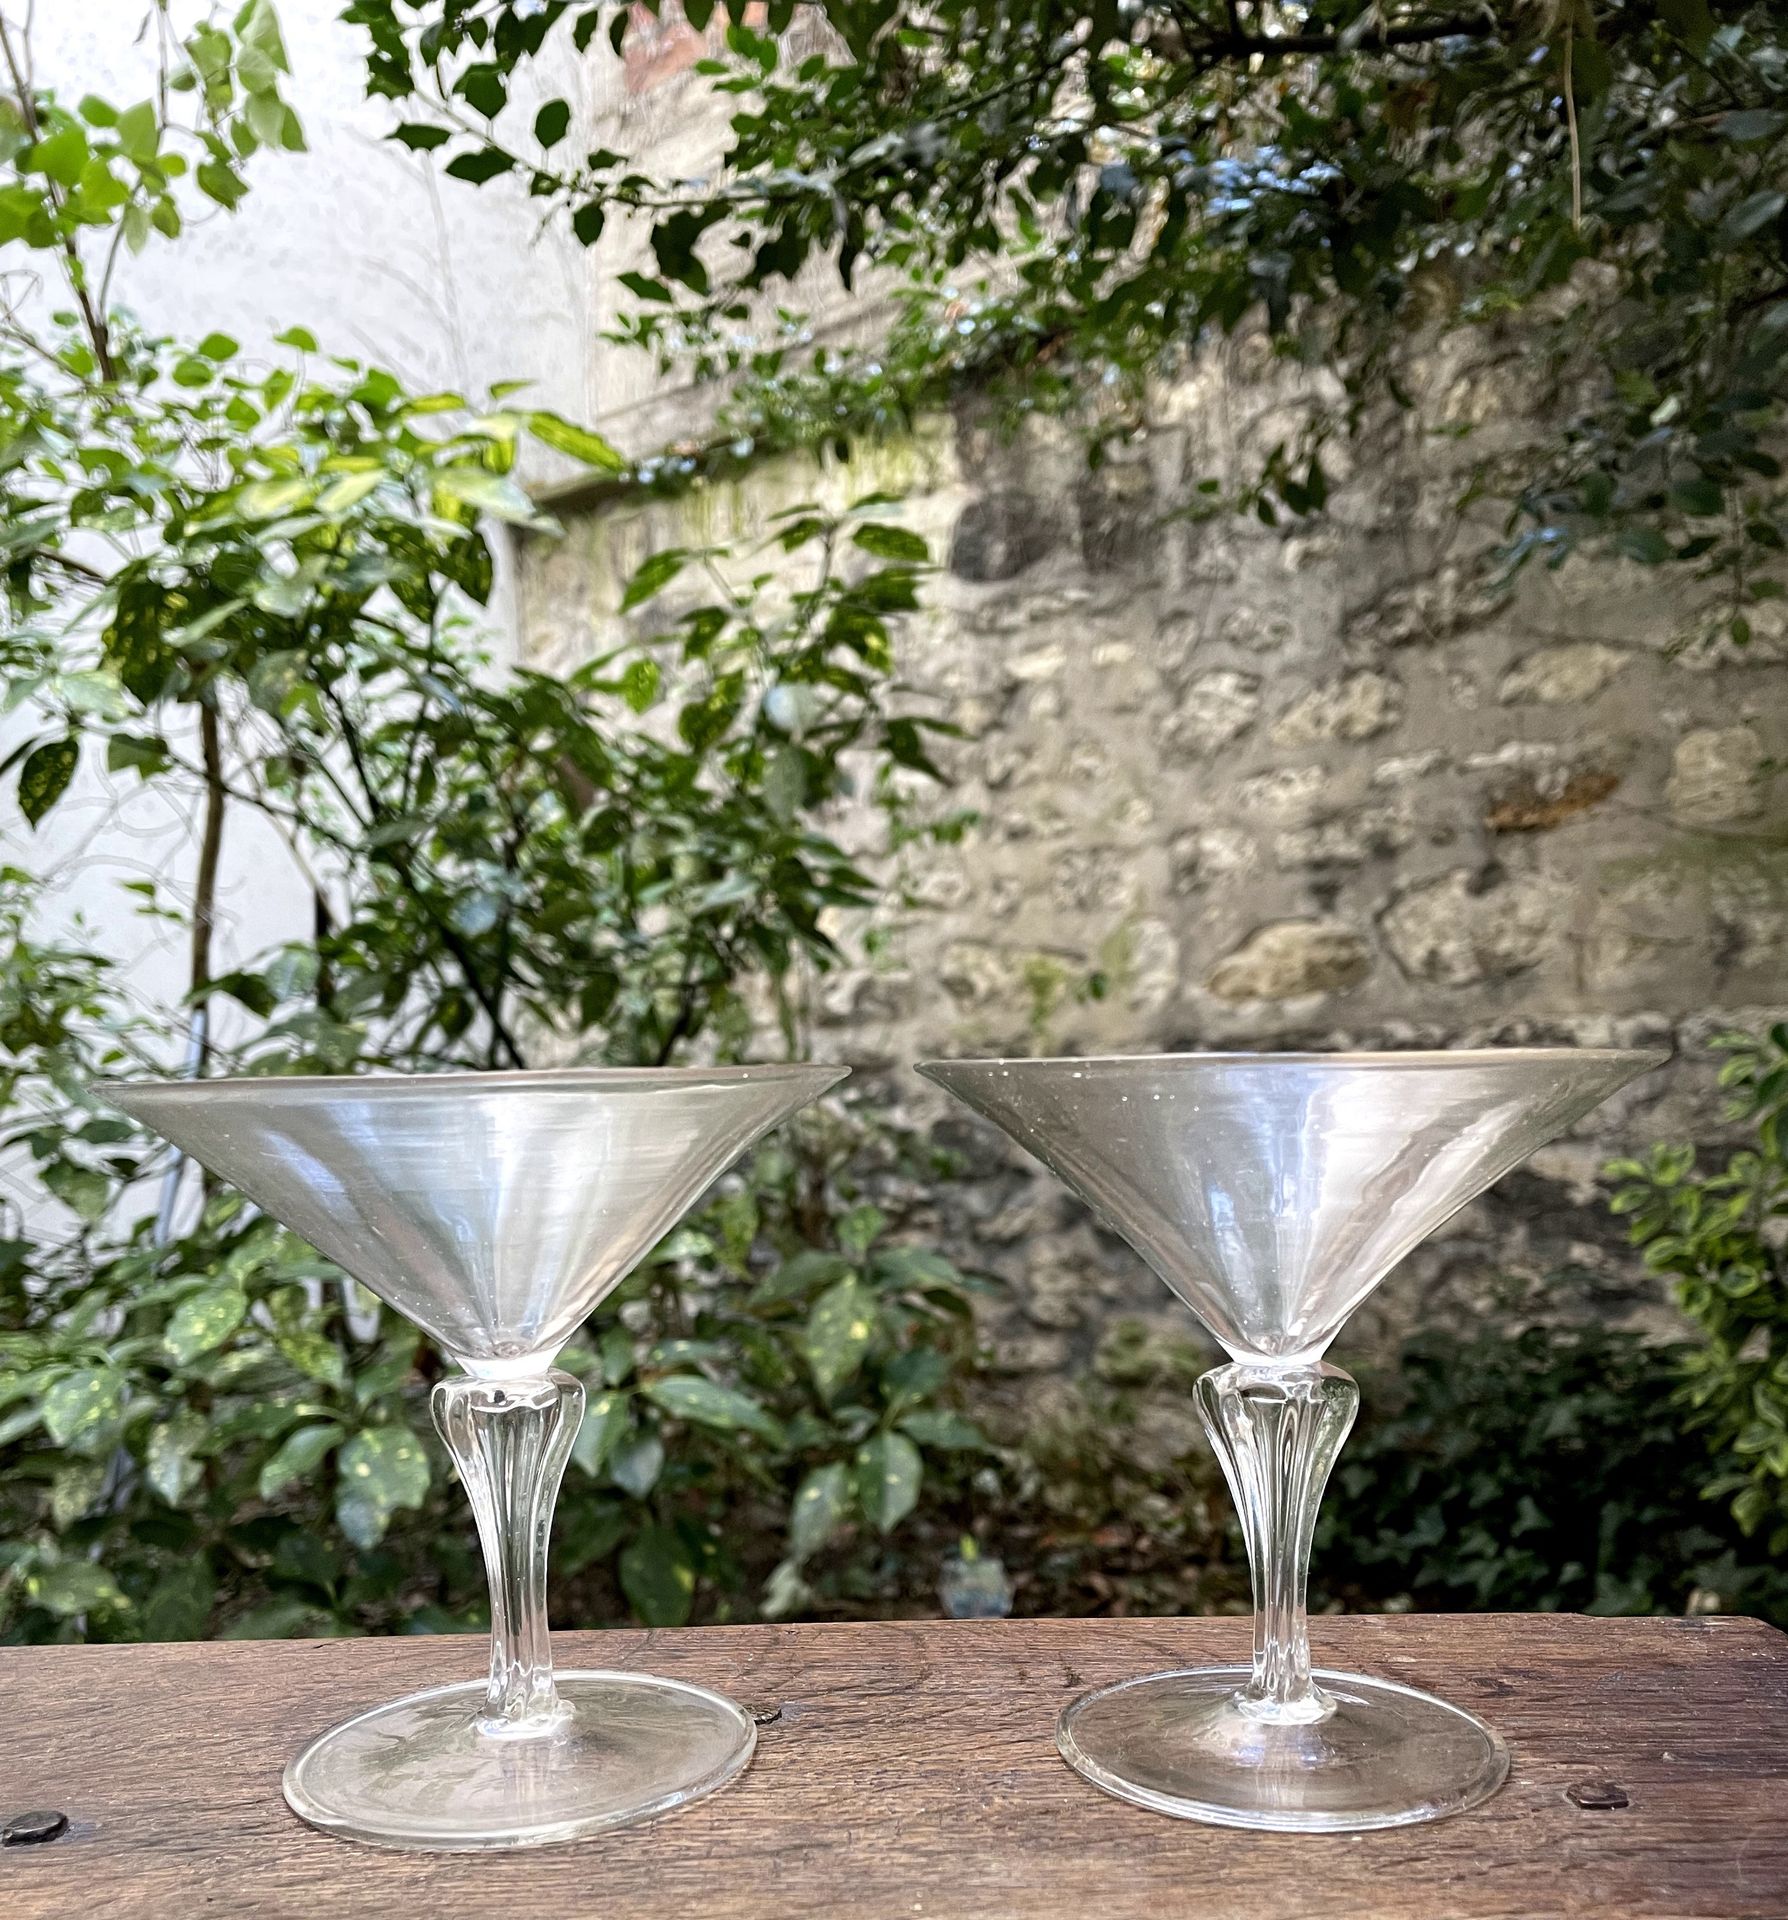 Null 两只吹制的玻璃杯在脚下。

18世纪

H.11厘米